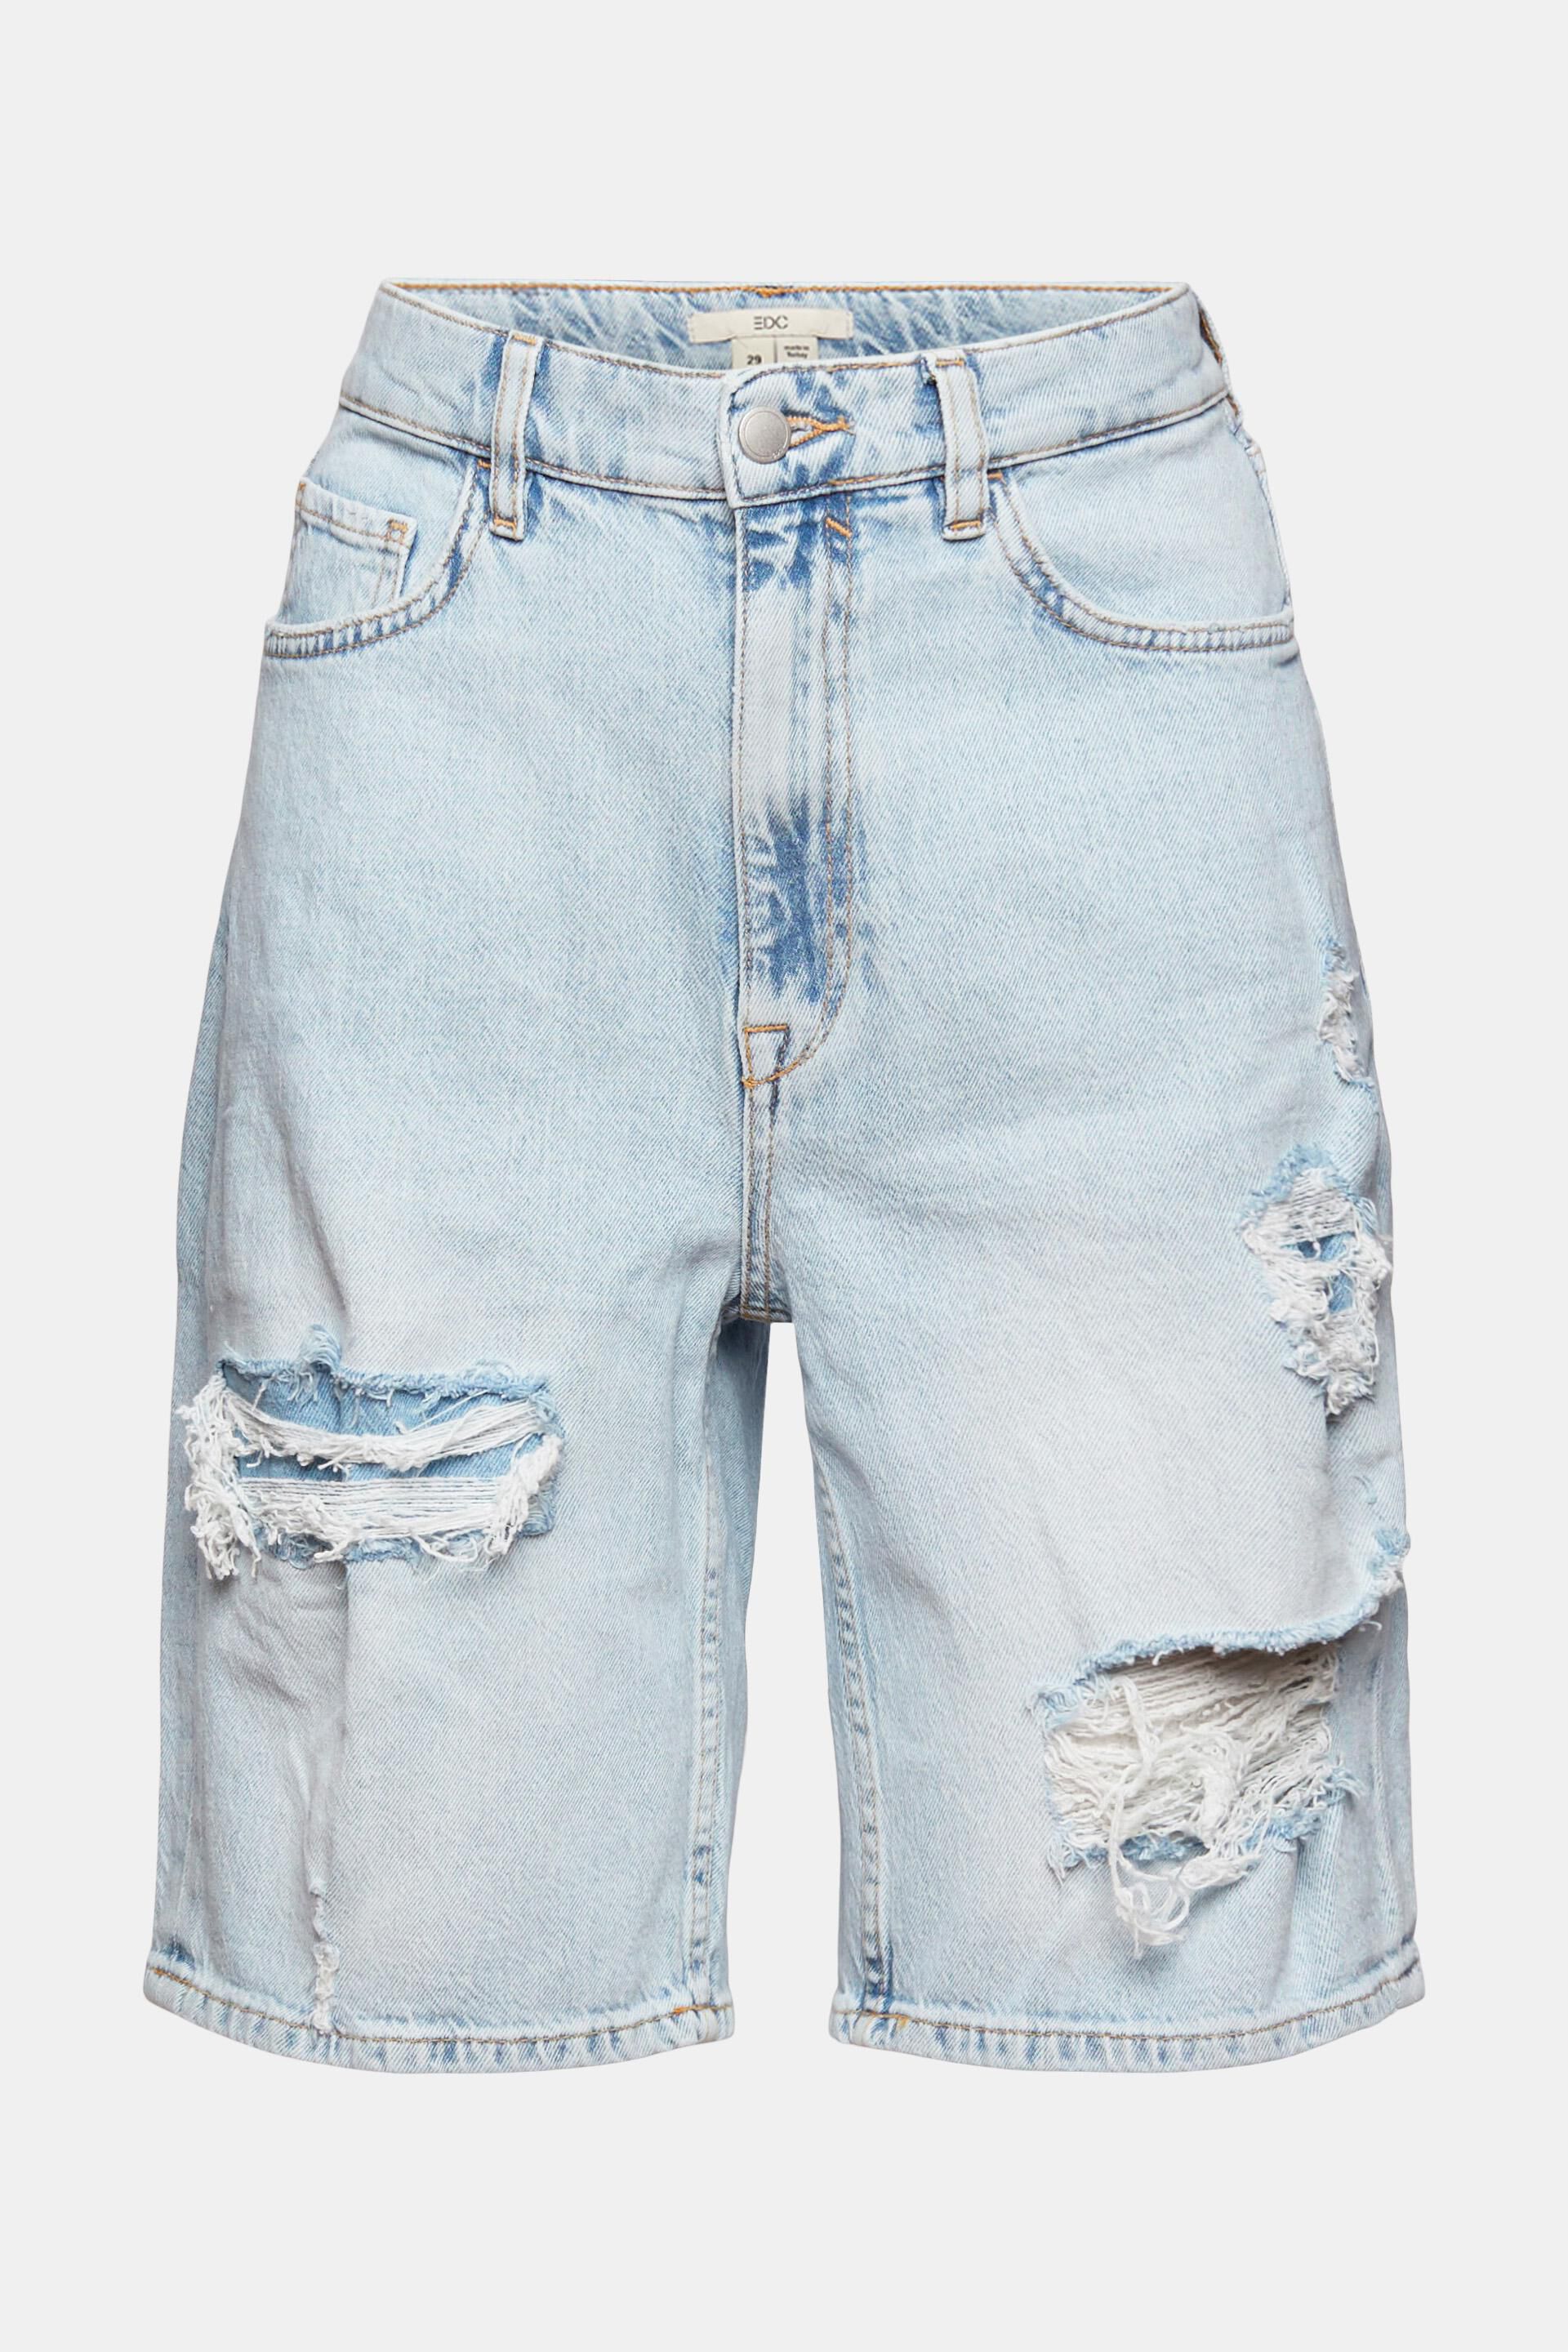 DAMEN Jeans Shorts jeans Basisch Primark Shorts jeans Rabatt 68 % Blau 44 